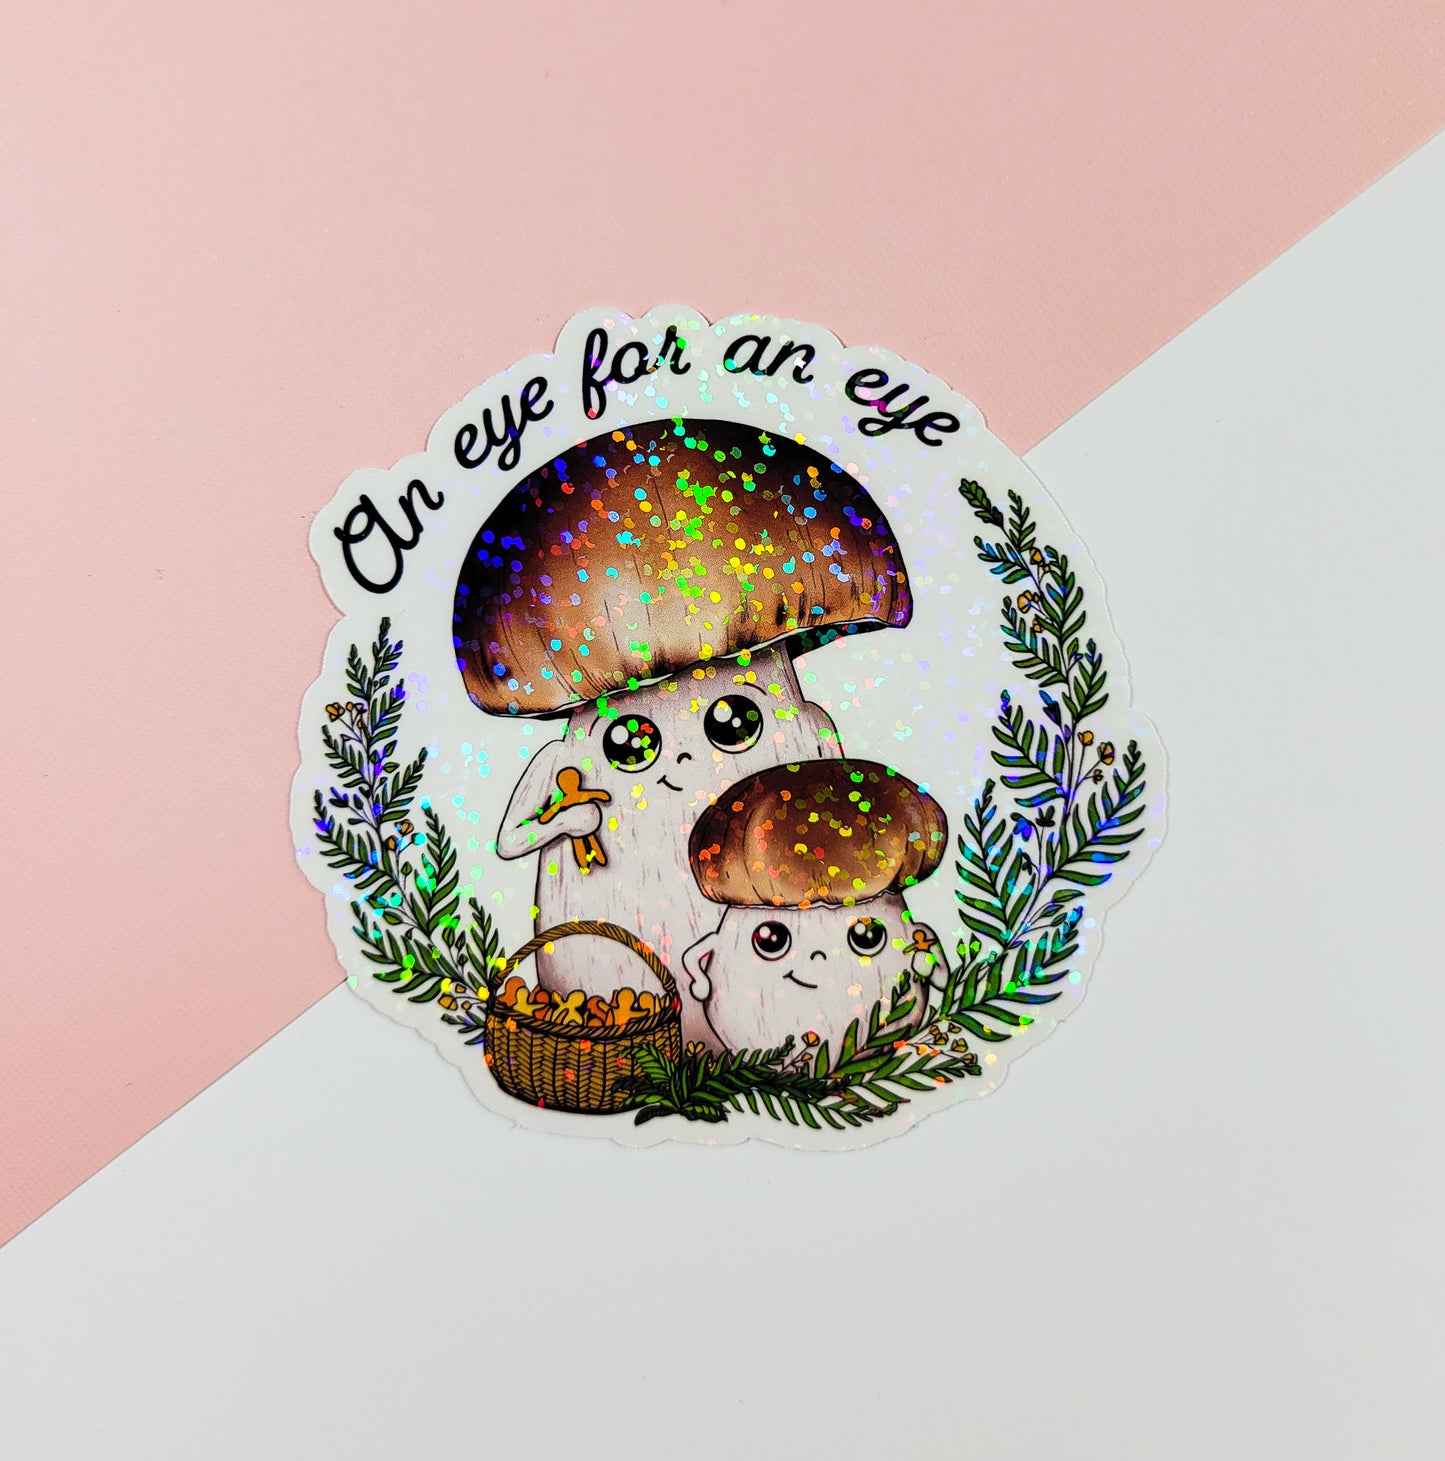 An Eye For An Eye | Funny Porcini Mushroom Sticker